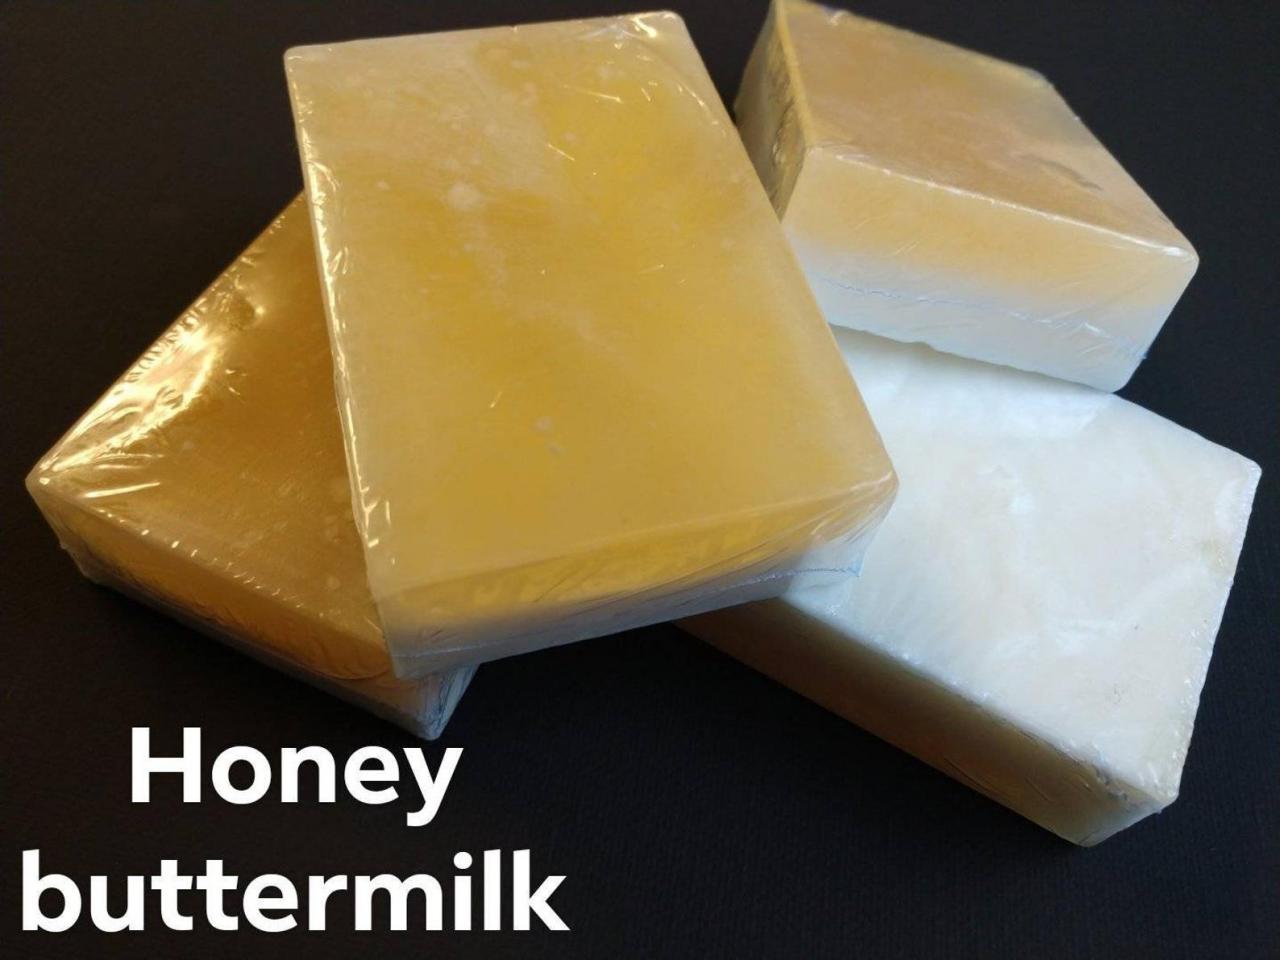 Honey buttermilk All natural handmade 4oz soap bars.